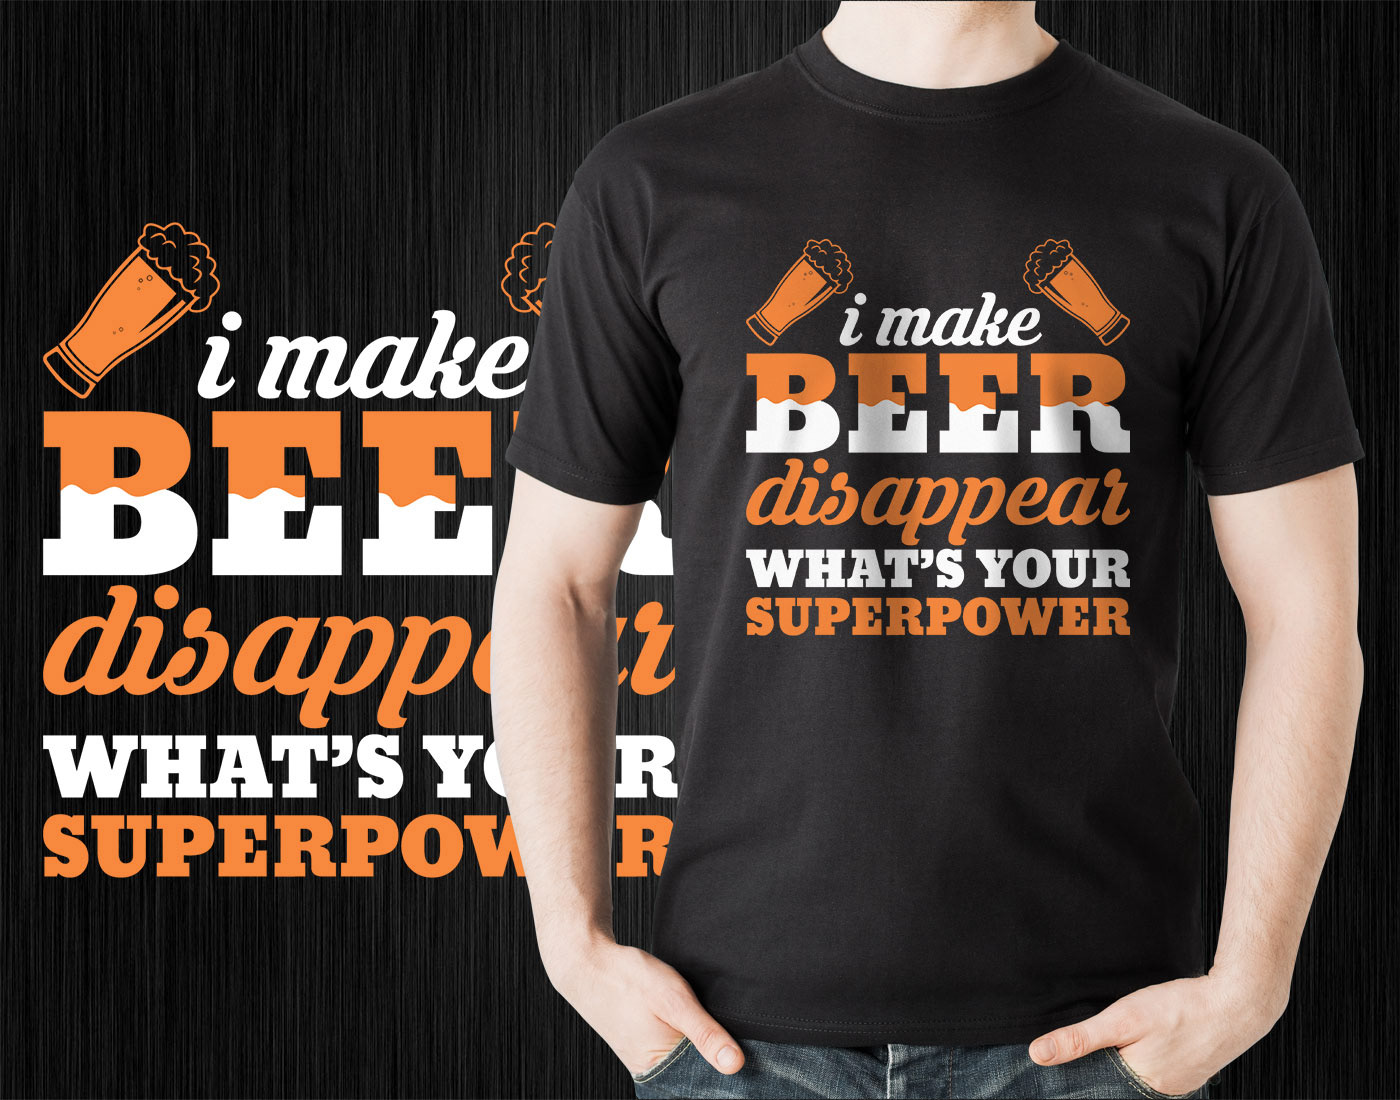 t-shirt T-Shirt Design Clothing fiverr beer t-shirt beer Mothers Day T-Shirt fathers day t-shirt beer lovers Beer T-Shirt Design